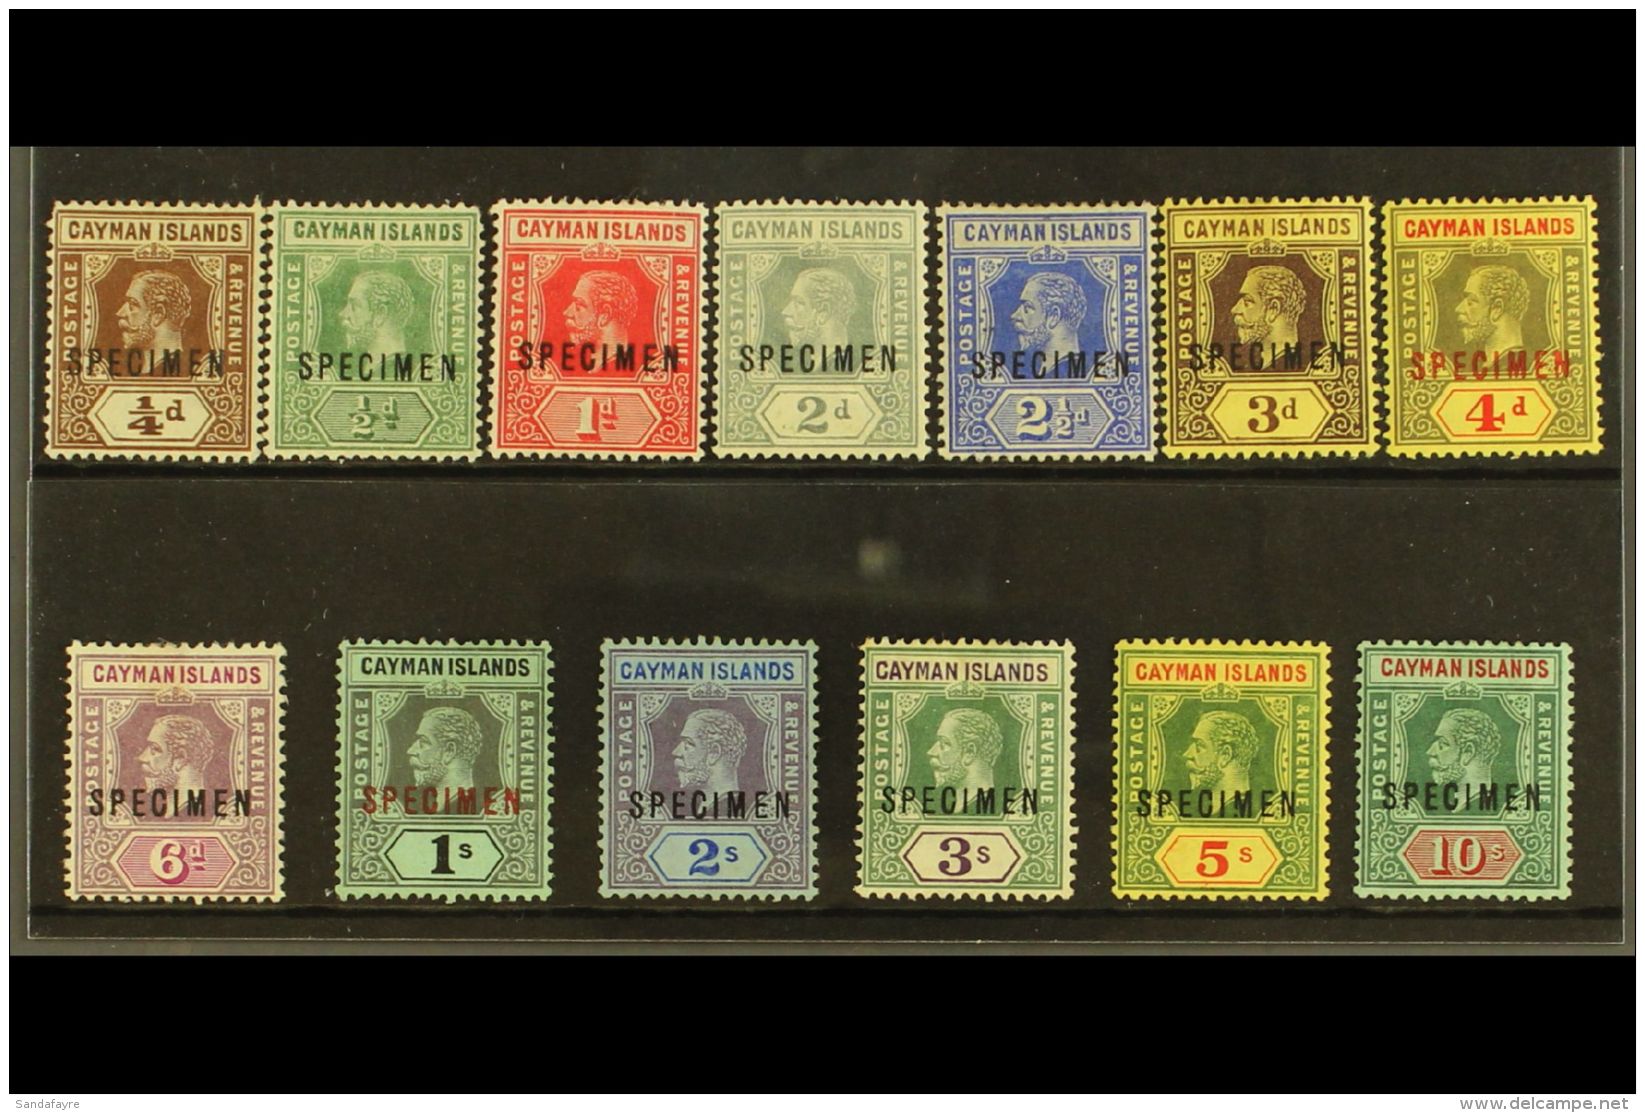 1912-20 SPECIMENS KGV Complete Set With "SPECIMEN" Overprints, SG 40s/52s, Fine Mint With Good Colour. Attractive... - Kaaiman Eilanden